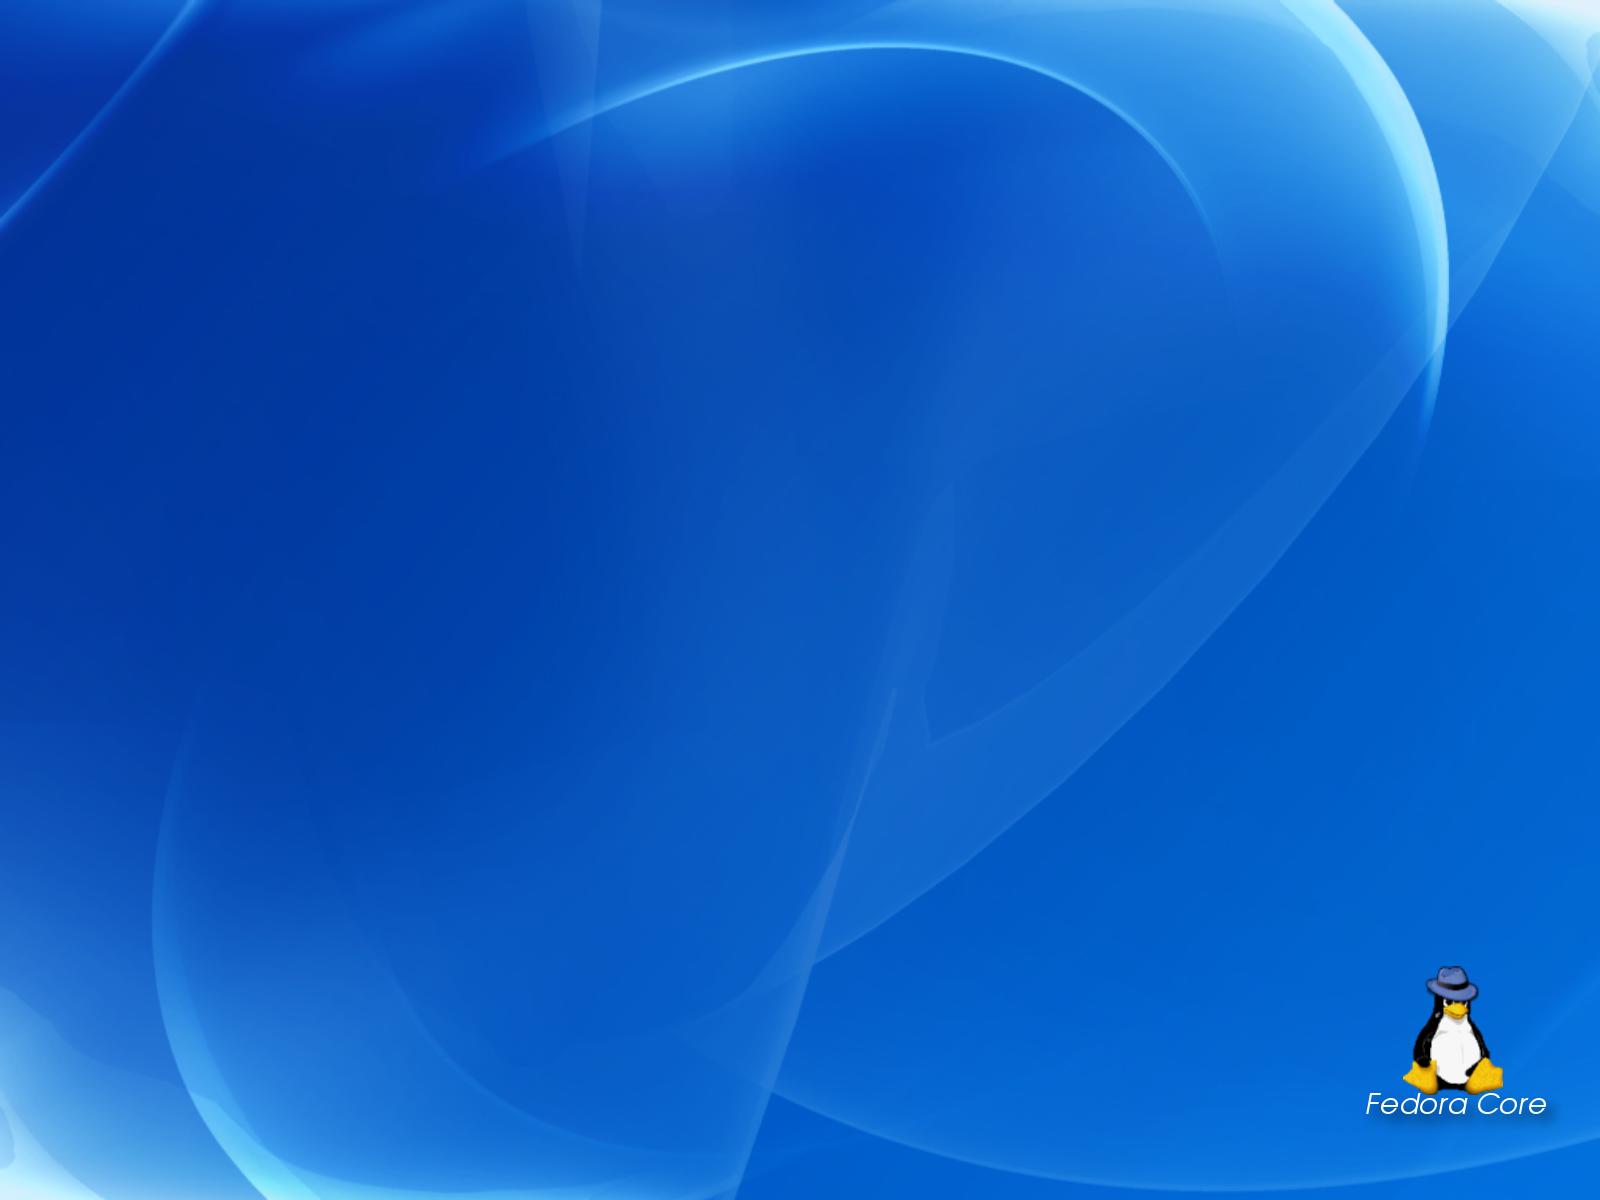 Fedora Core Blue Wallpaper